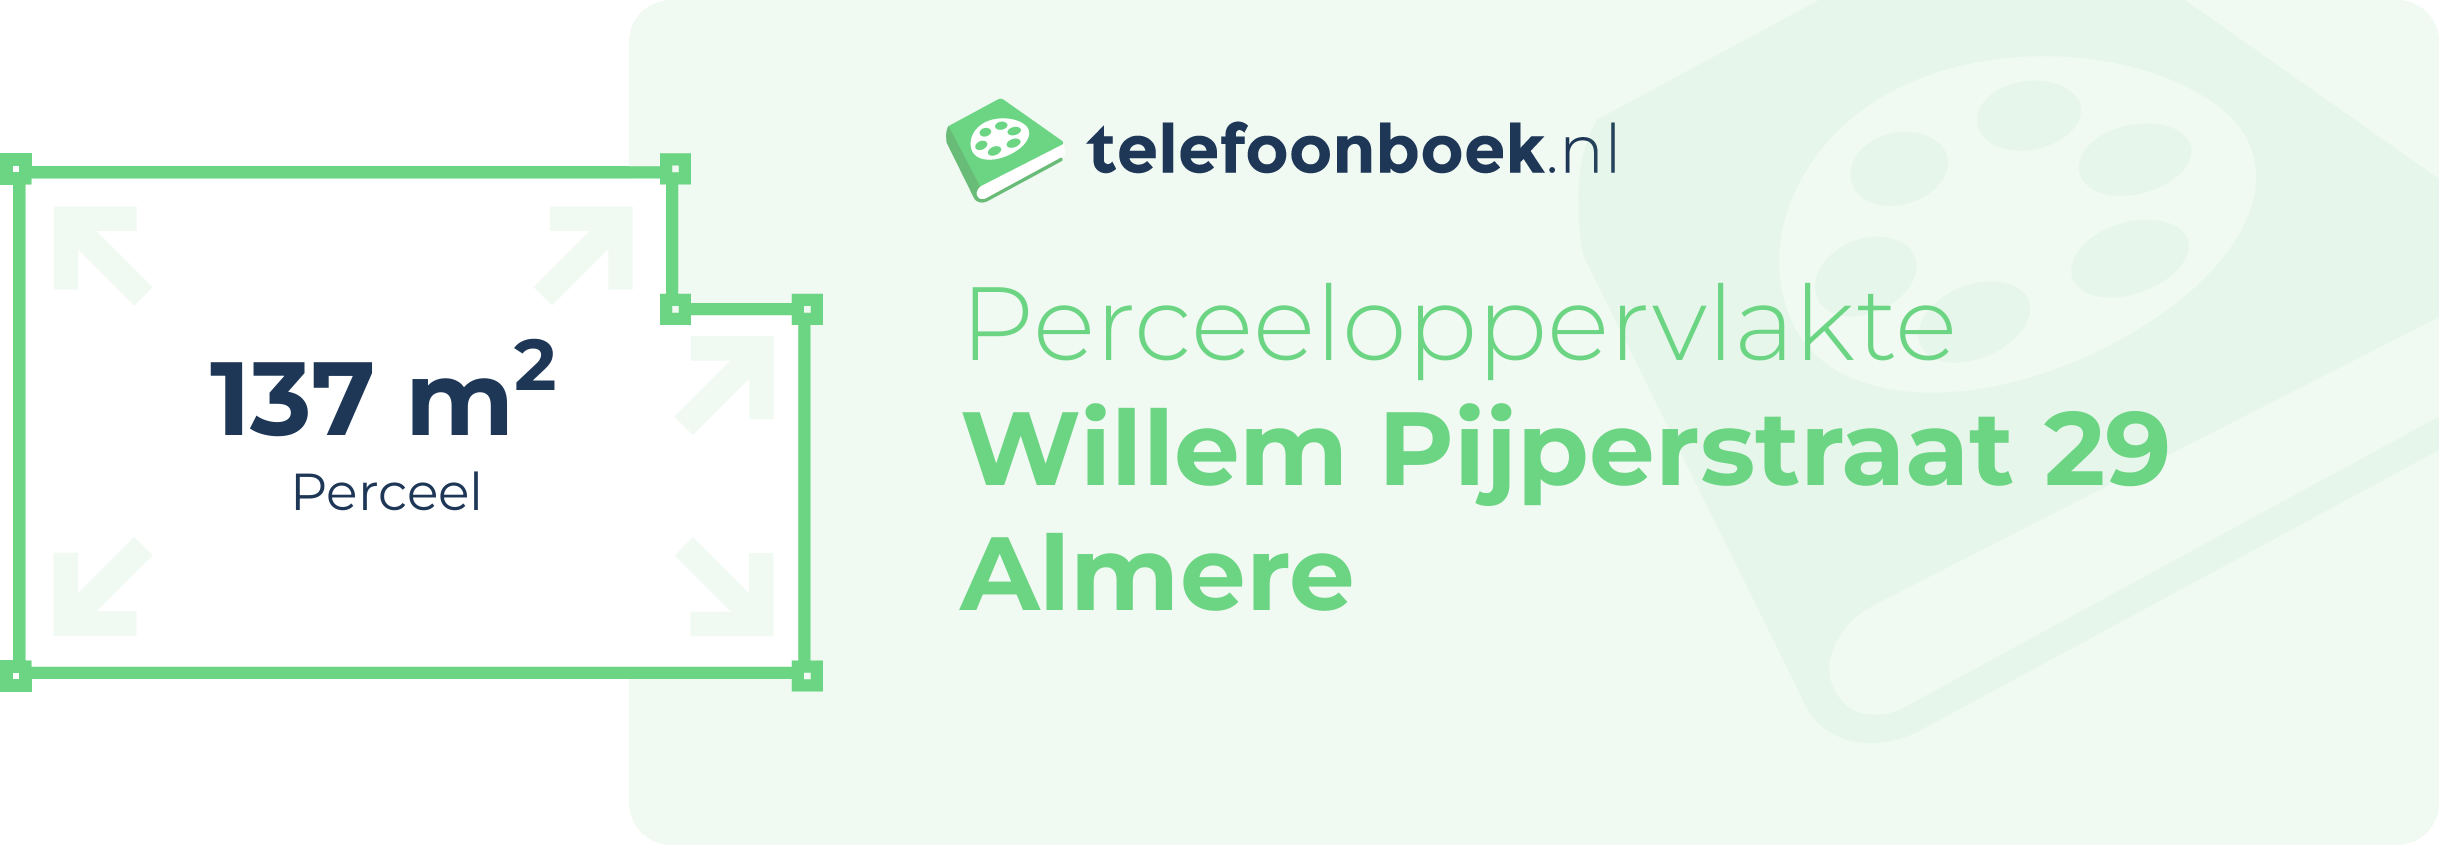 Perceeloppervlakte Willem Pijperstraat 29 Almere